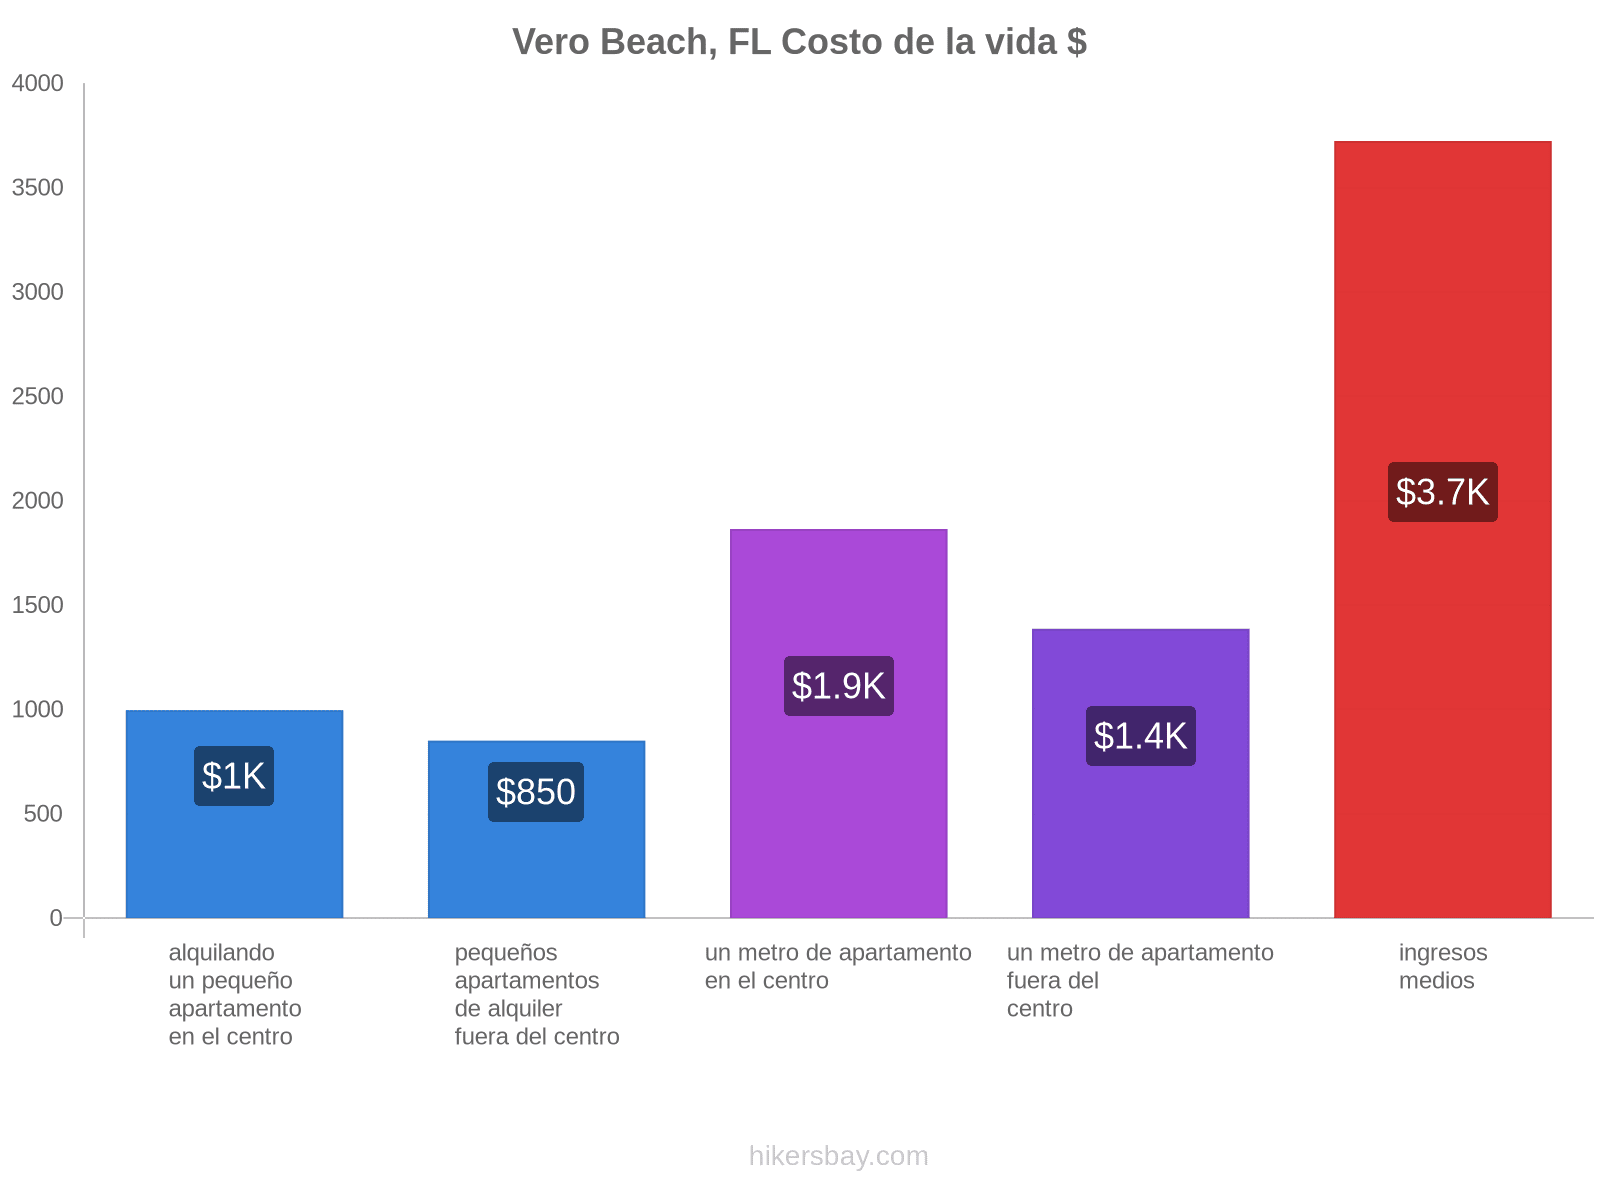 Vero Beach, FL costo de la vida hikersbay.com